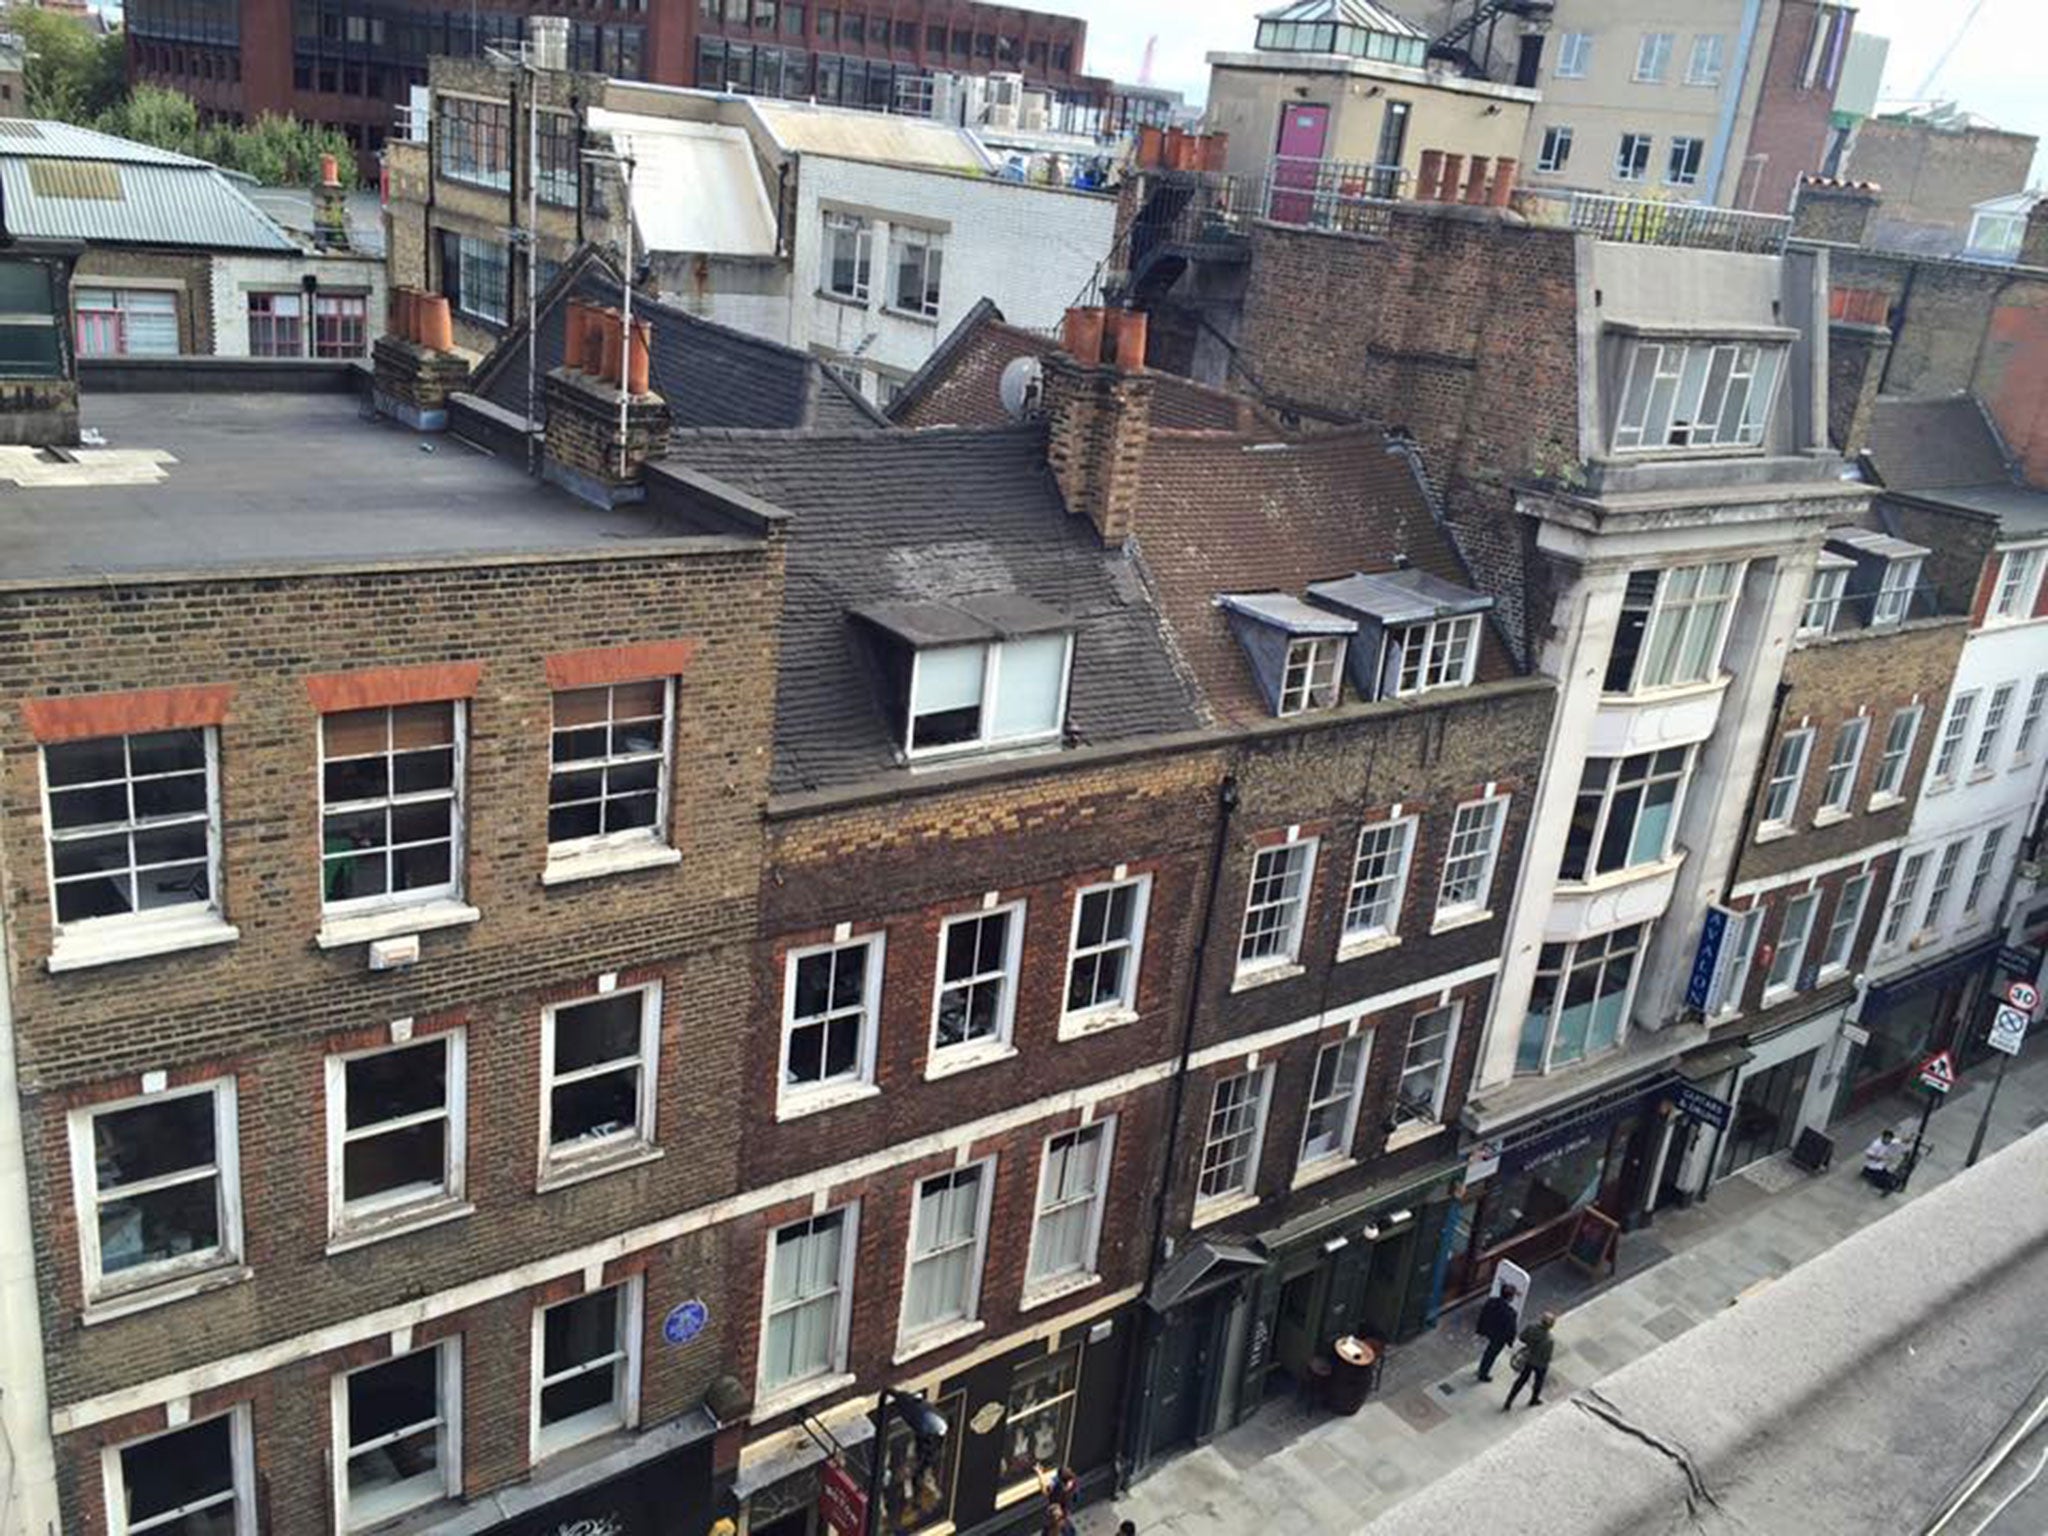 Denmark Street in central London, where Johnny Rotten scrawled his graffiti